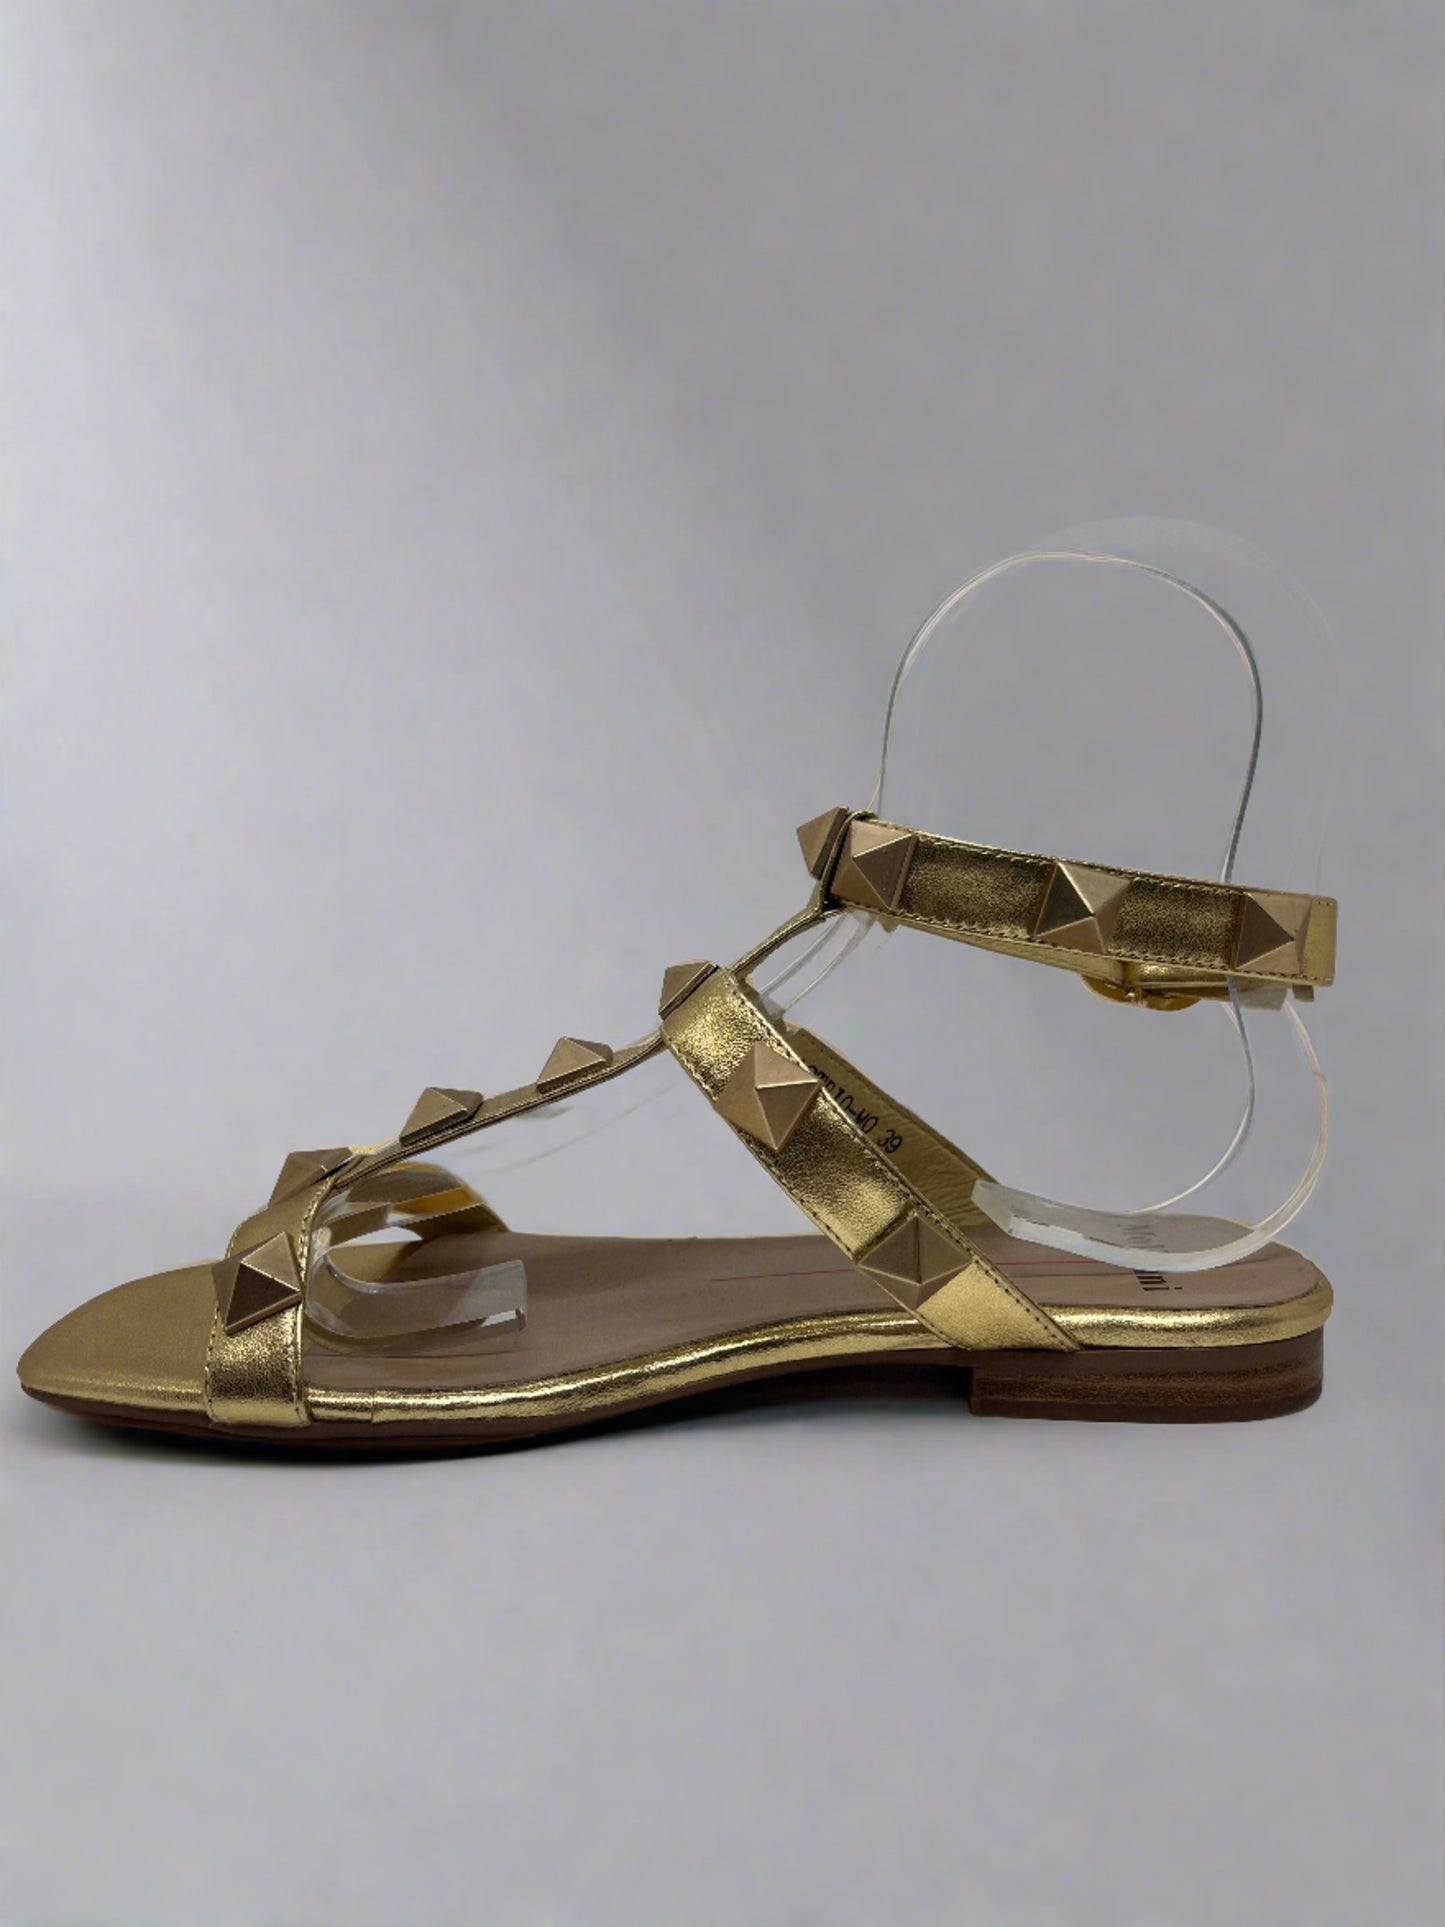 ASTRIO STUDDED FLAT - MOLLINI - 36, 37, 38, 39, 40, 41, BLACK, GOLD, womens footwear - Stomp Shoes Darwin